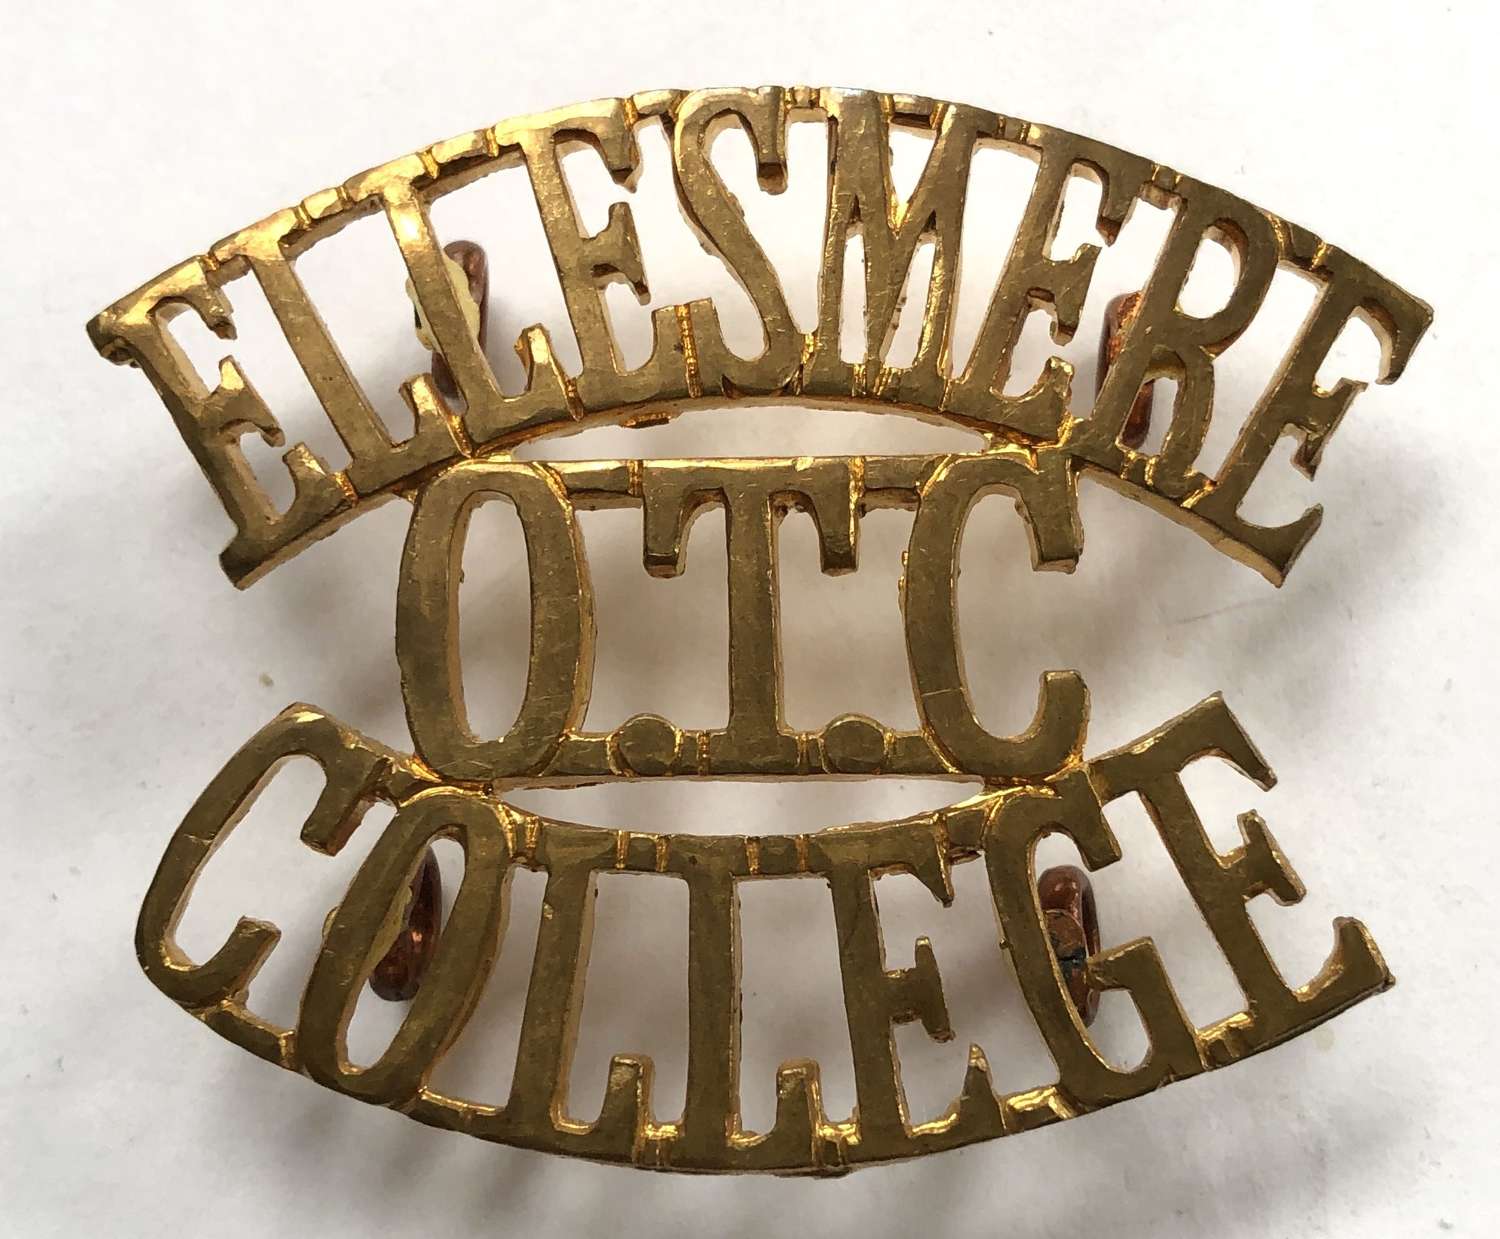 ELLESMERE / OTC / COLLEGE shoulder title circa 1908-40